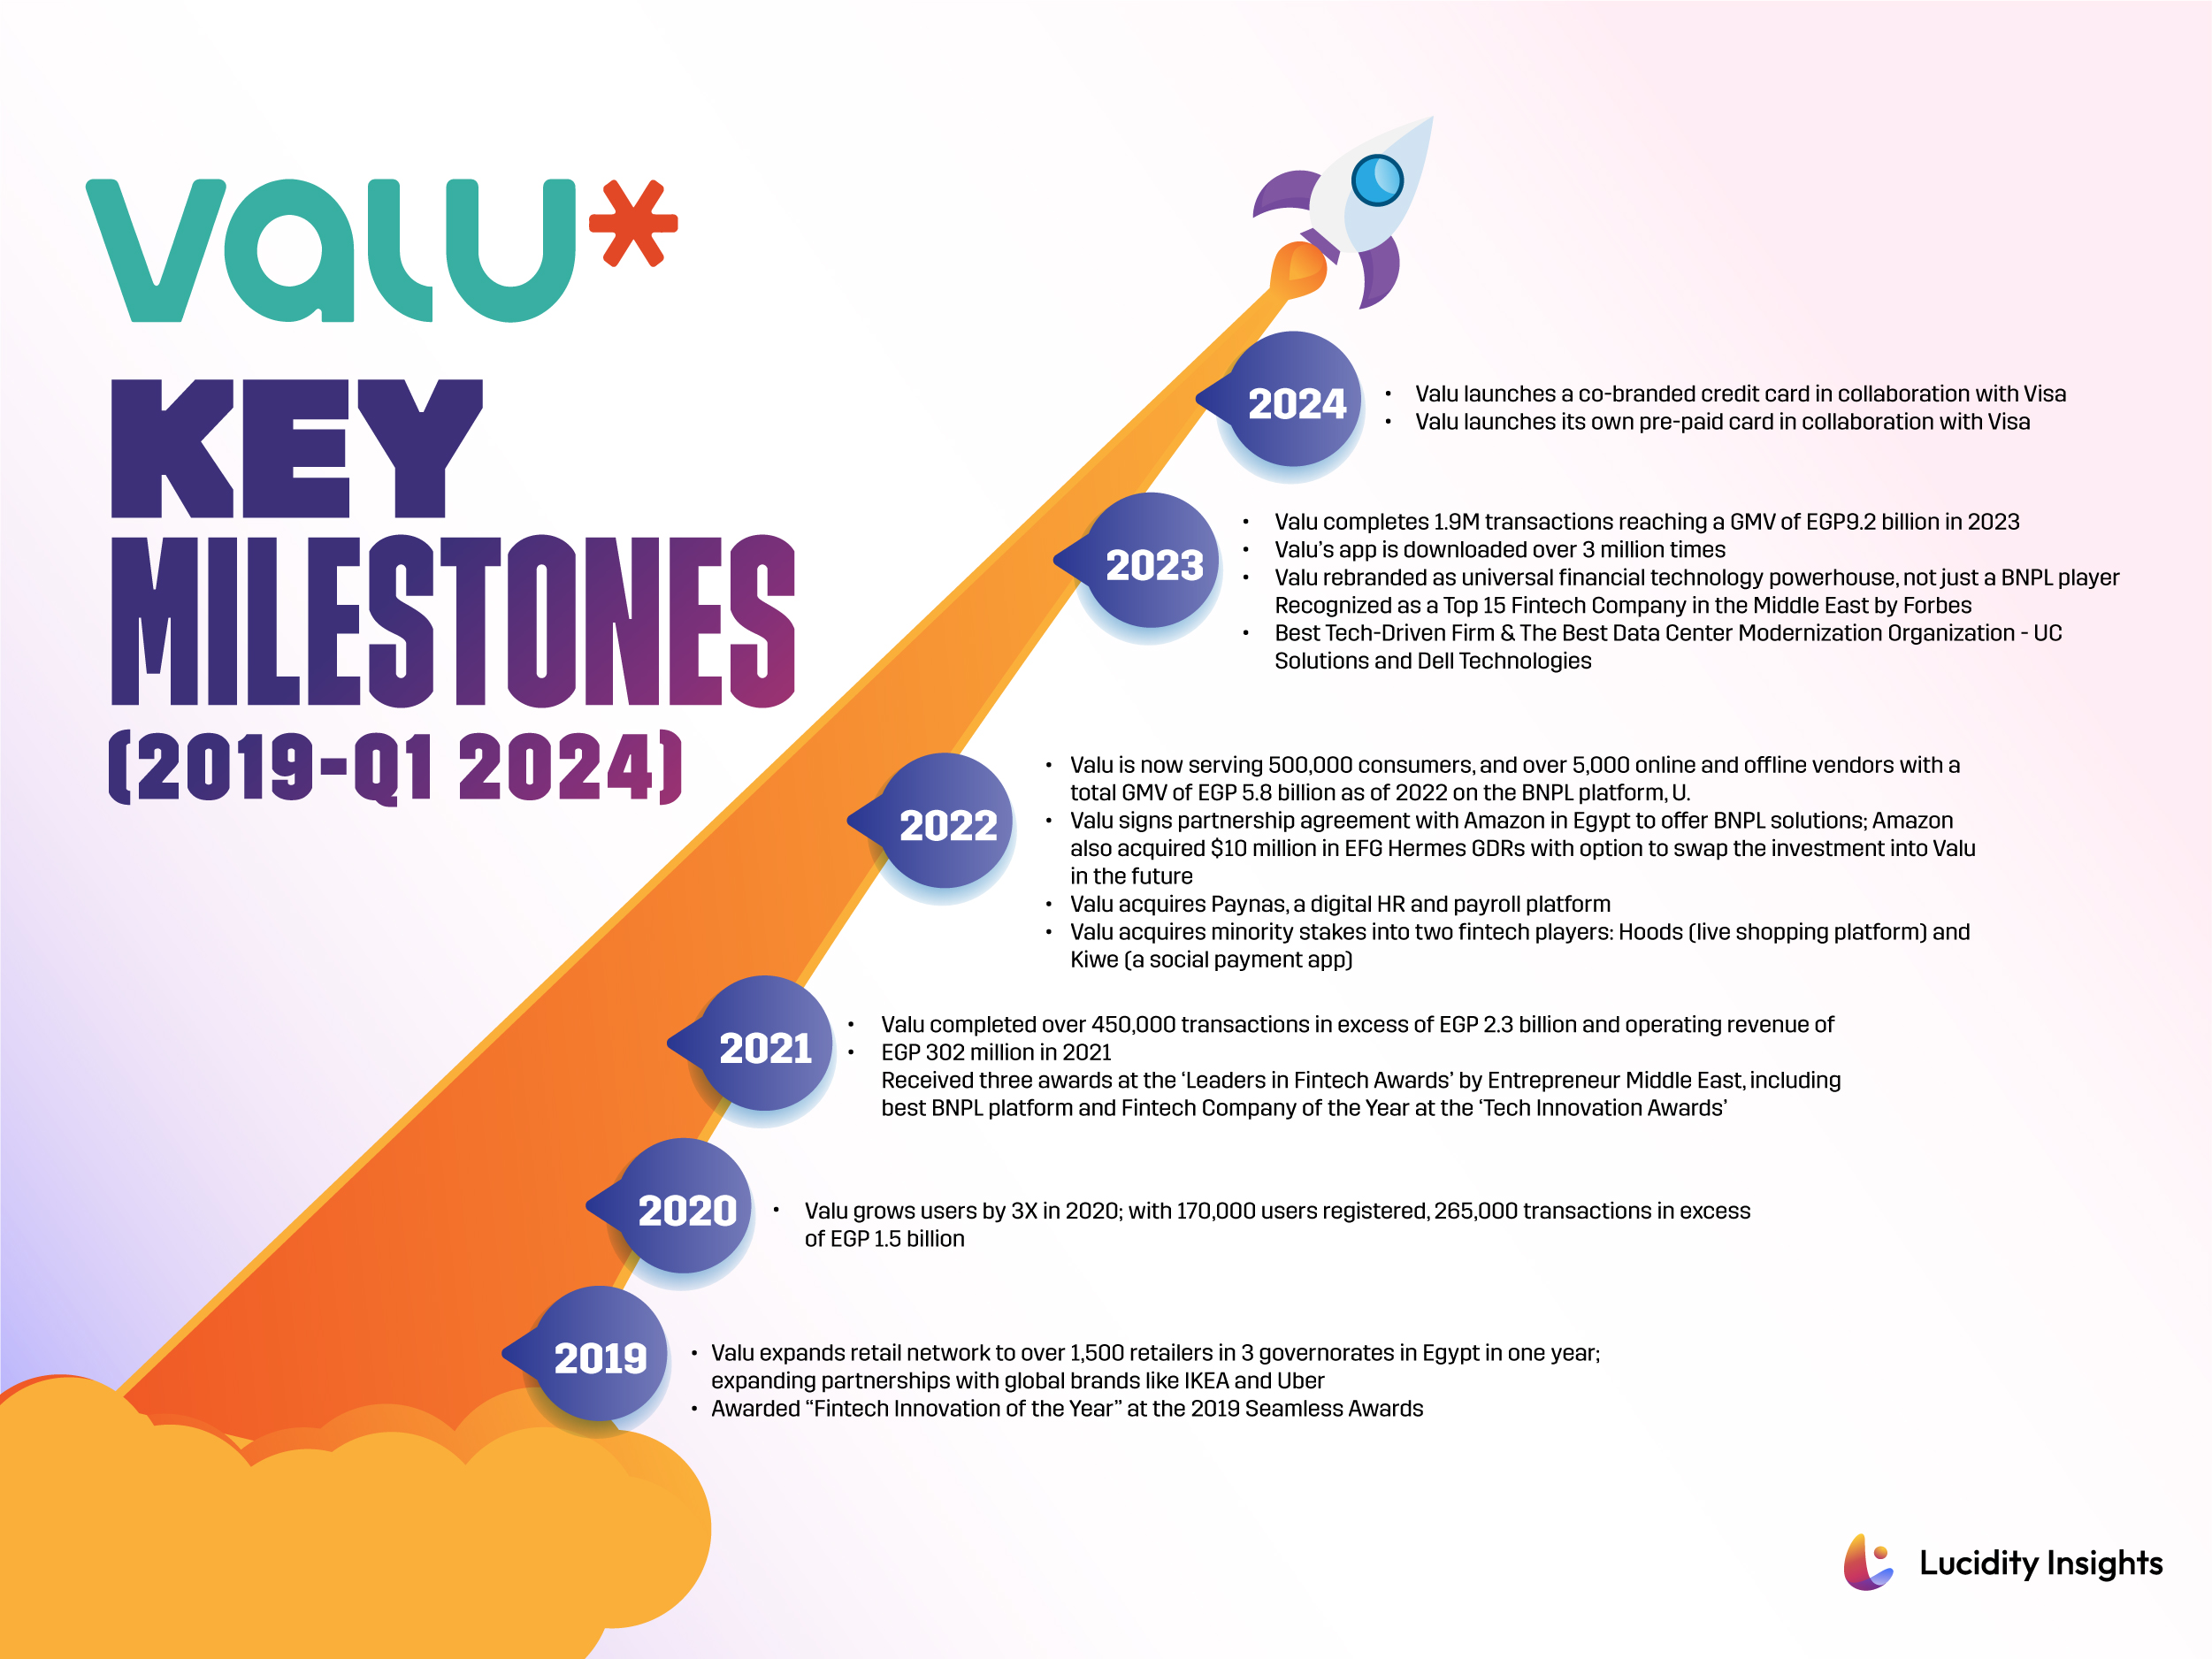 ValU’s Key Milestones (2019 - Q1 2024)